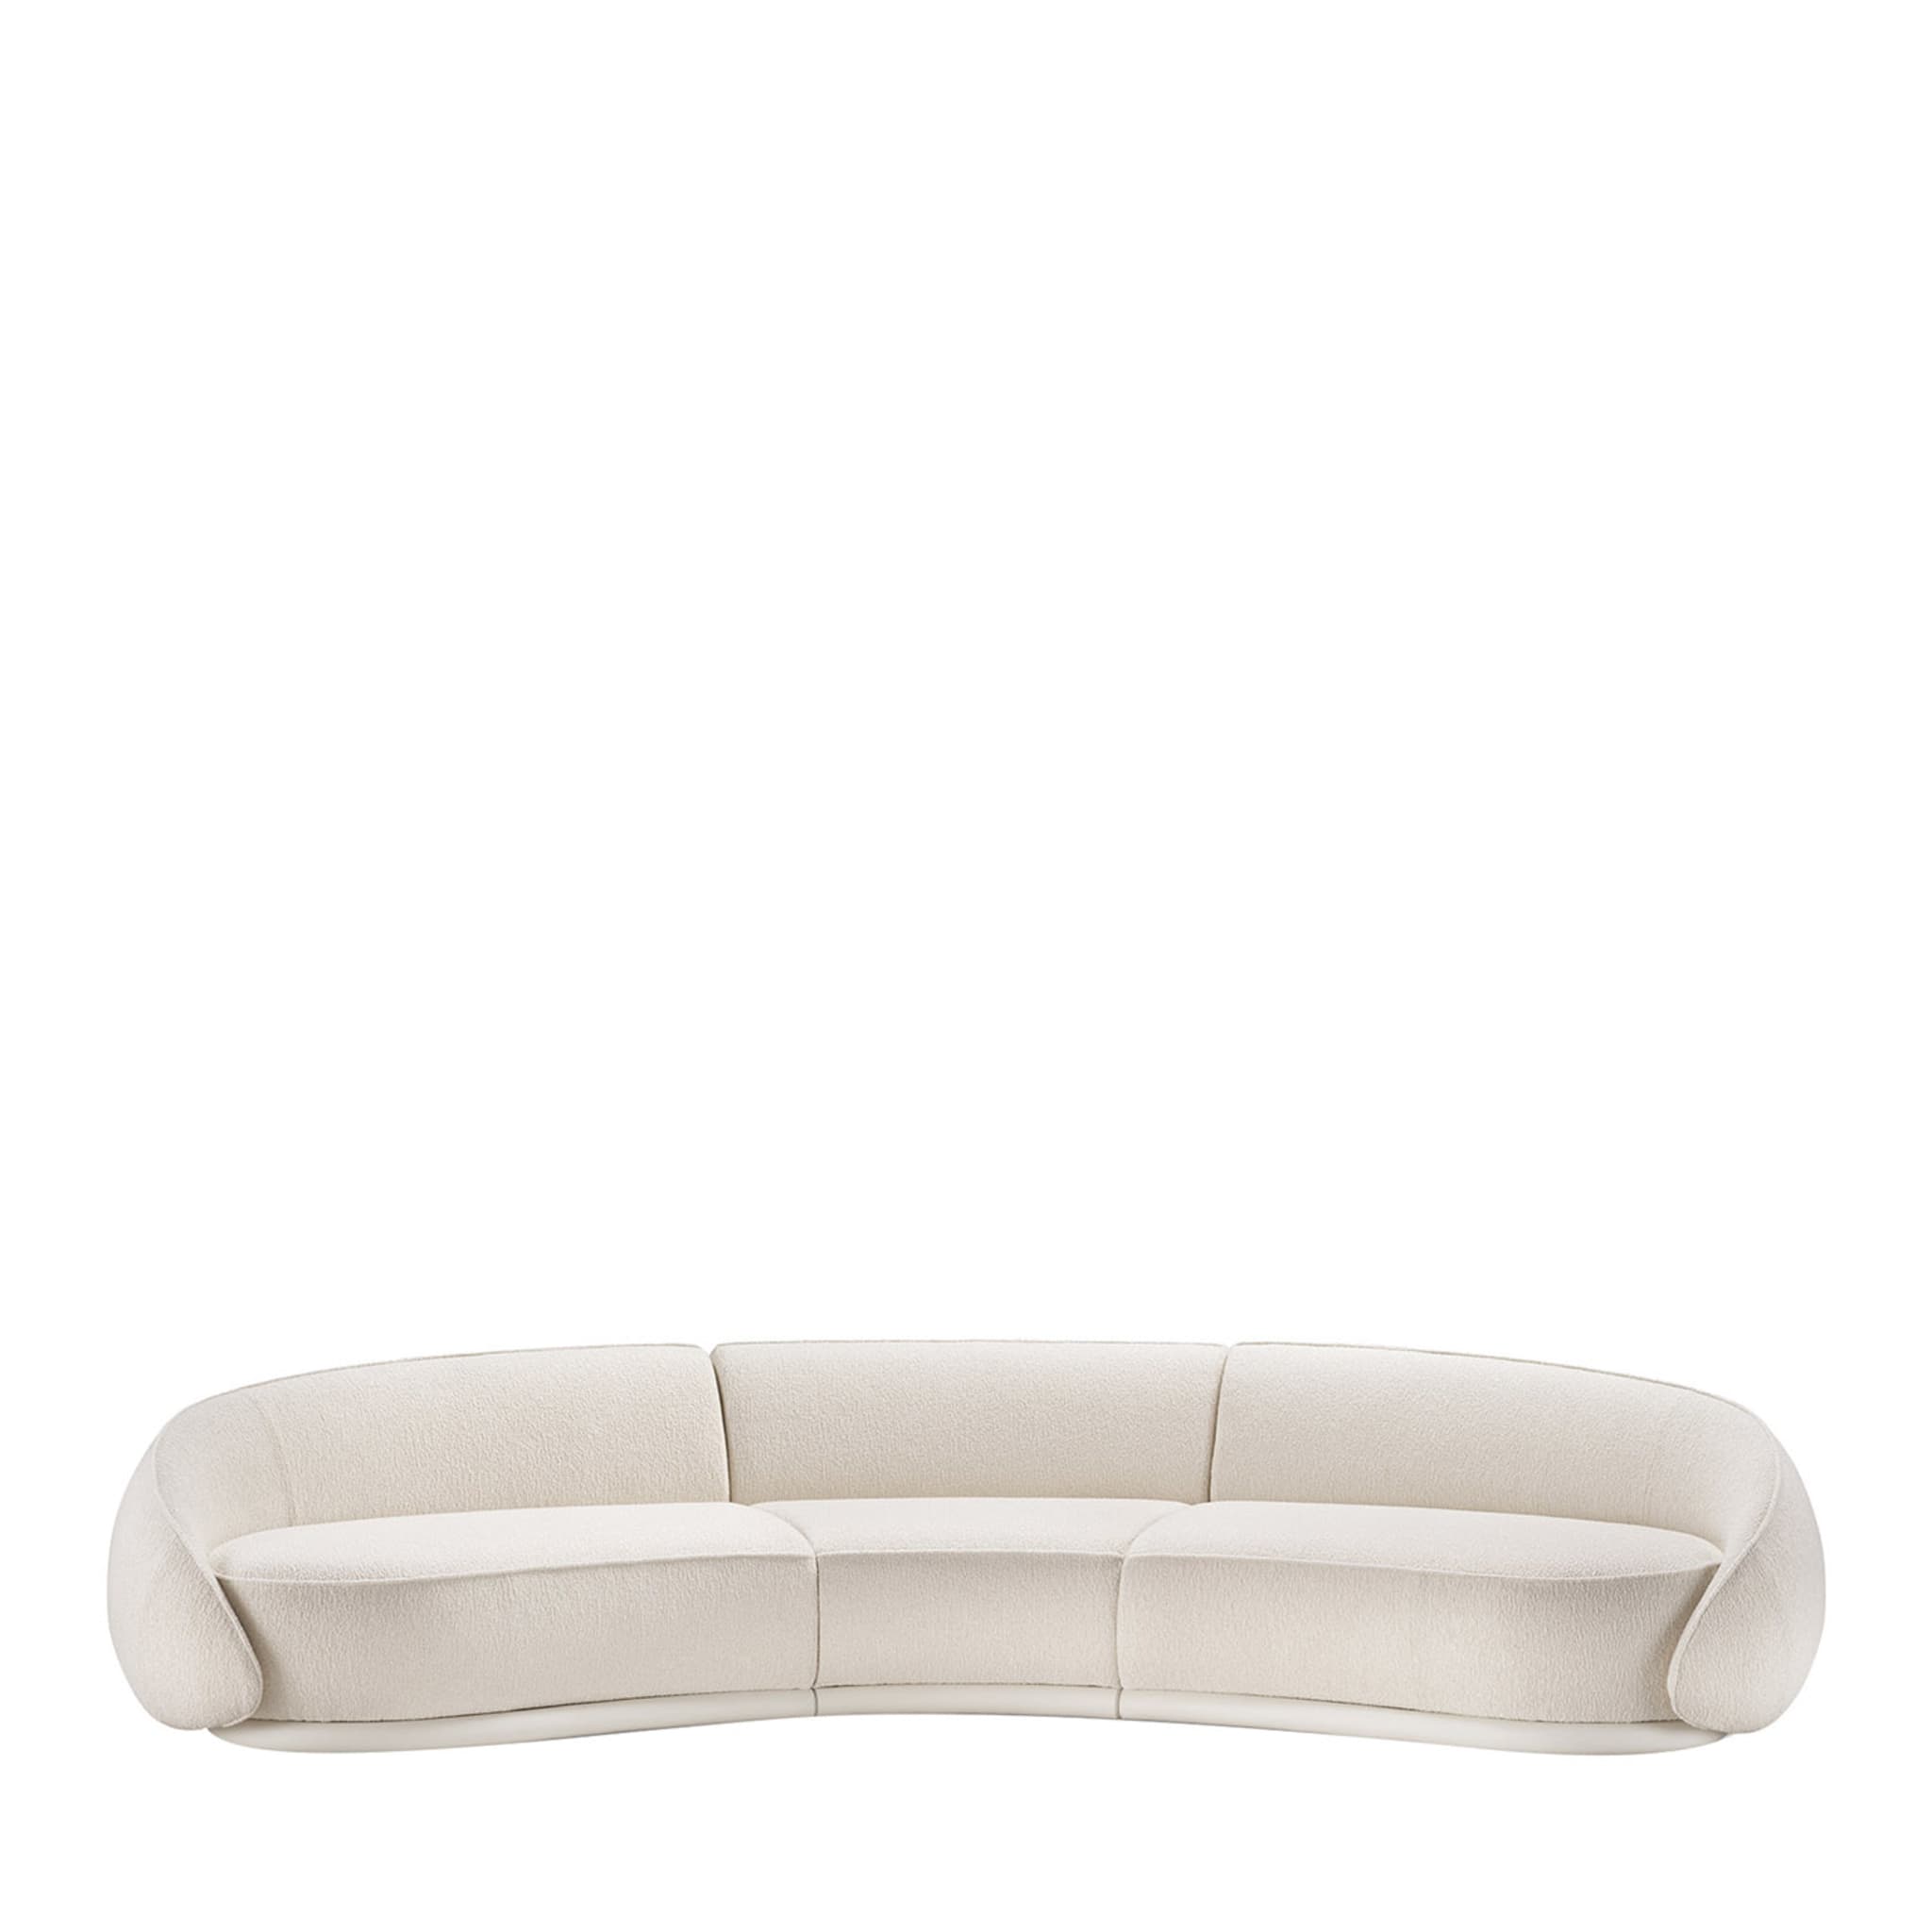 Abbracci 3-Module White Sofa by Lorenza Bozzoli - Main view